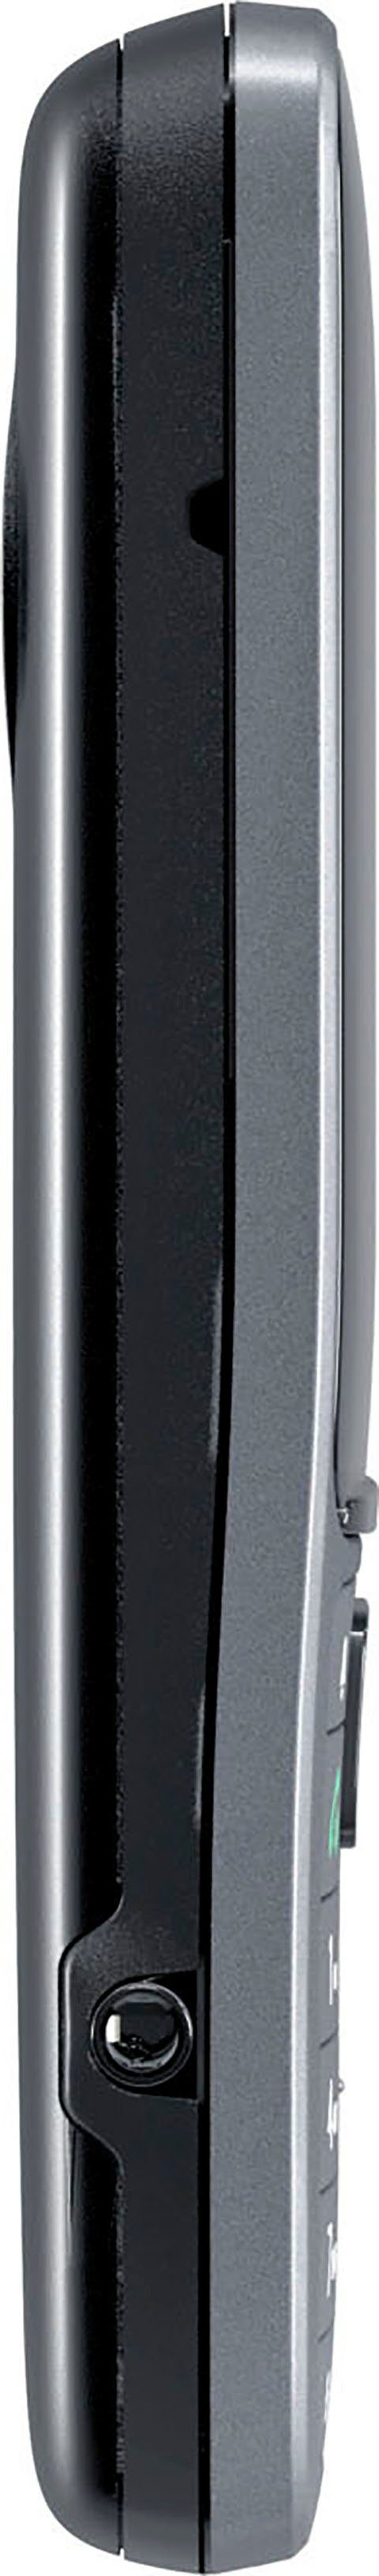 Telekom DECT (Bluetooth) Festnetztelefon D142 elmeg Handset